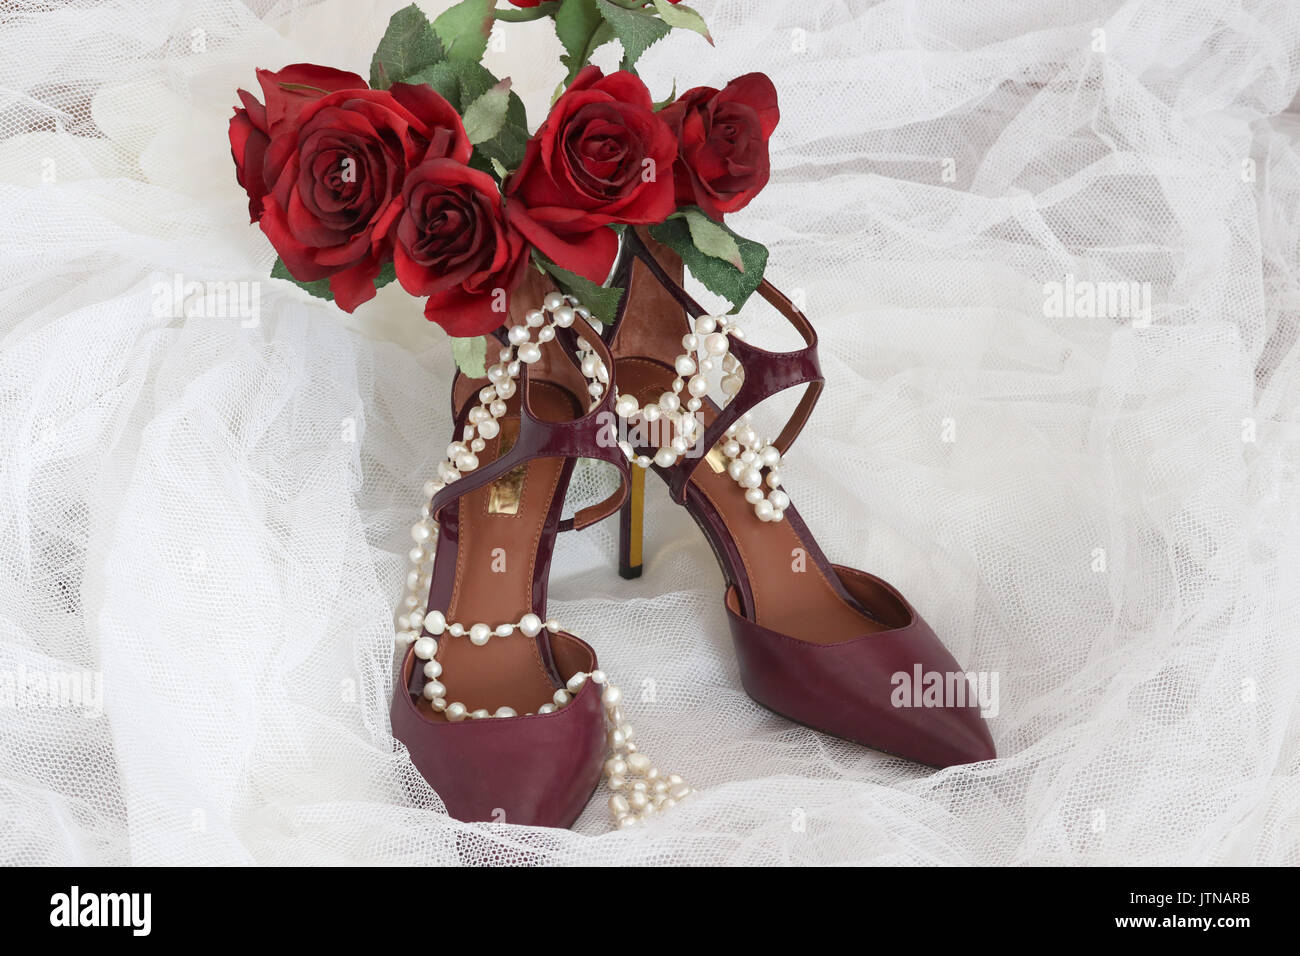 Lucido per Scarpe eleganti sposa. Colore Borgogna collina alta coppia di scarpe eleganti e spose bouquet di rose rosse su un bianco velo nuziale. Foto Stock